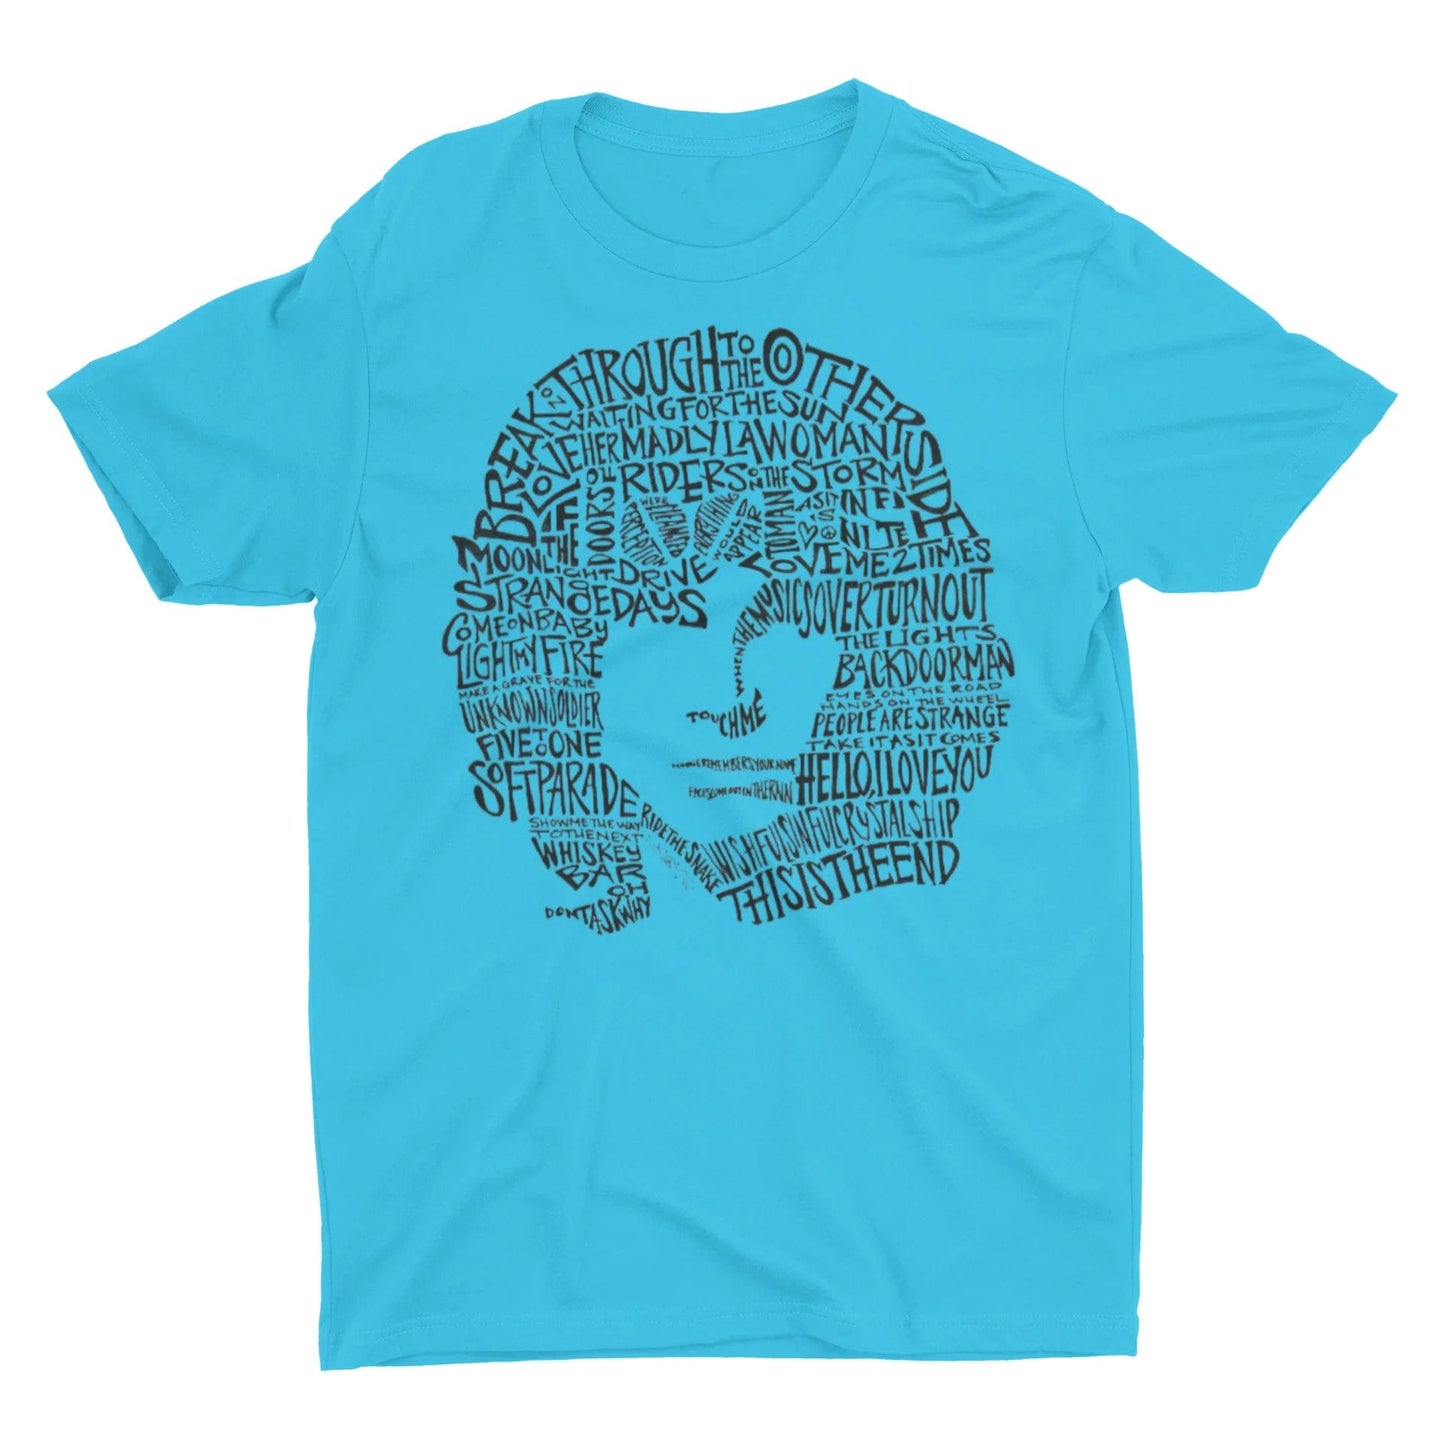 Jim Morrison T Shirt The Doors T-Shirts rockviewtees.com